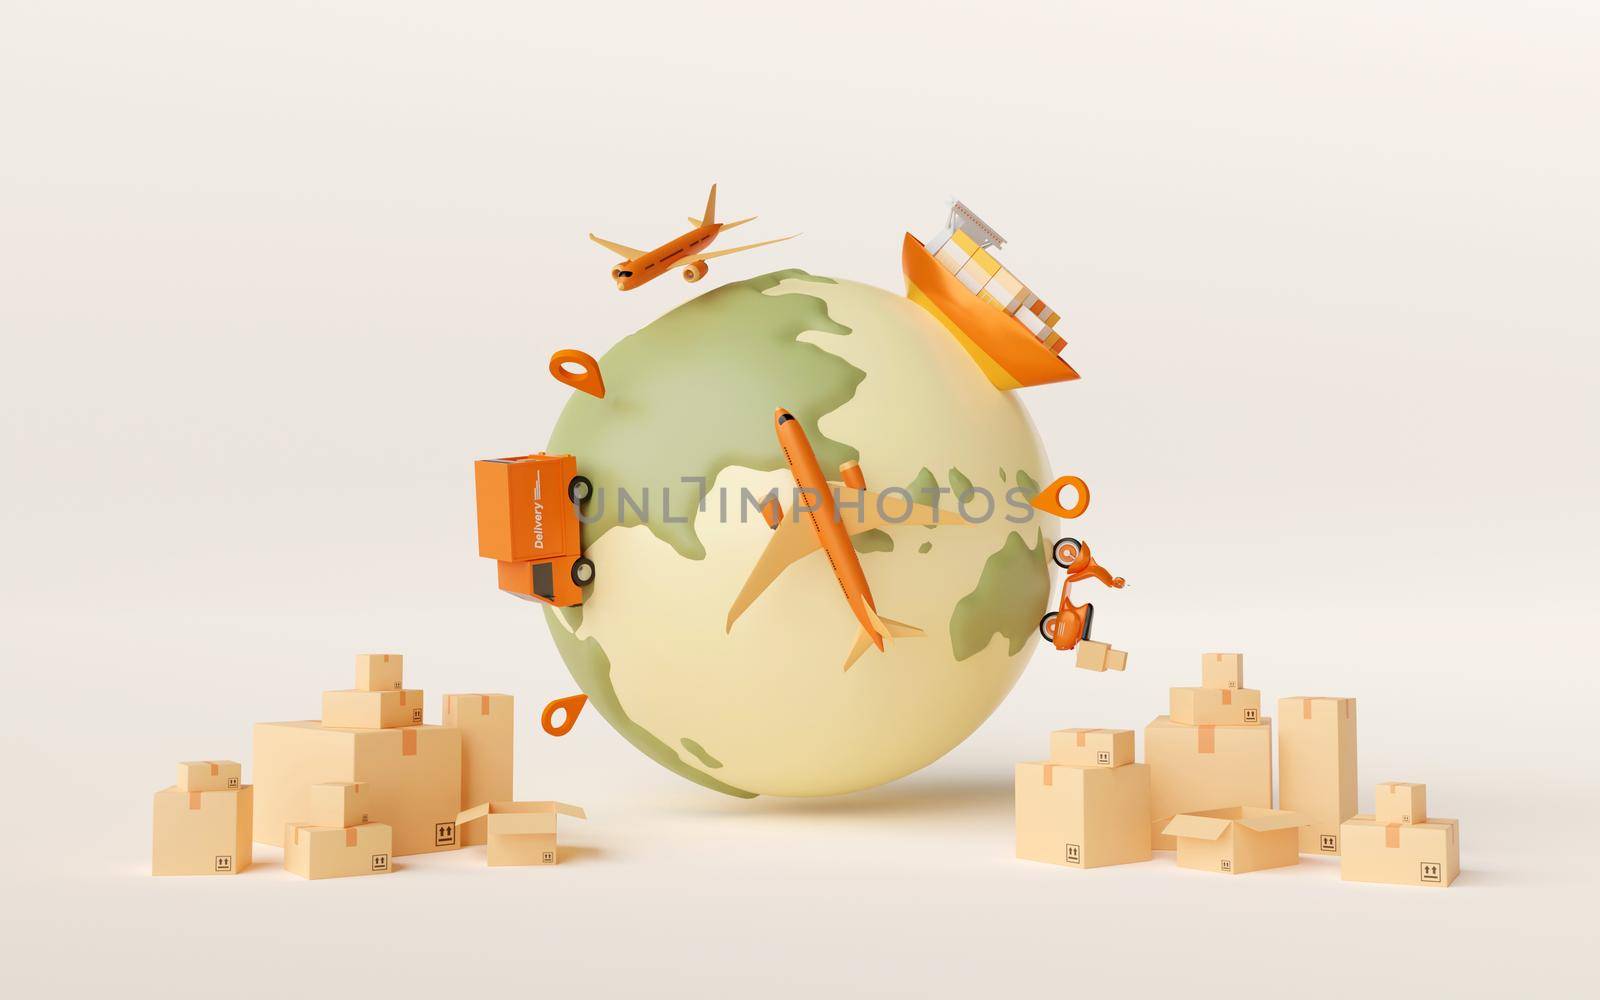 Global logistics, delivery and cargo transportation, 3d illustration by nutzchotwarut